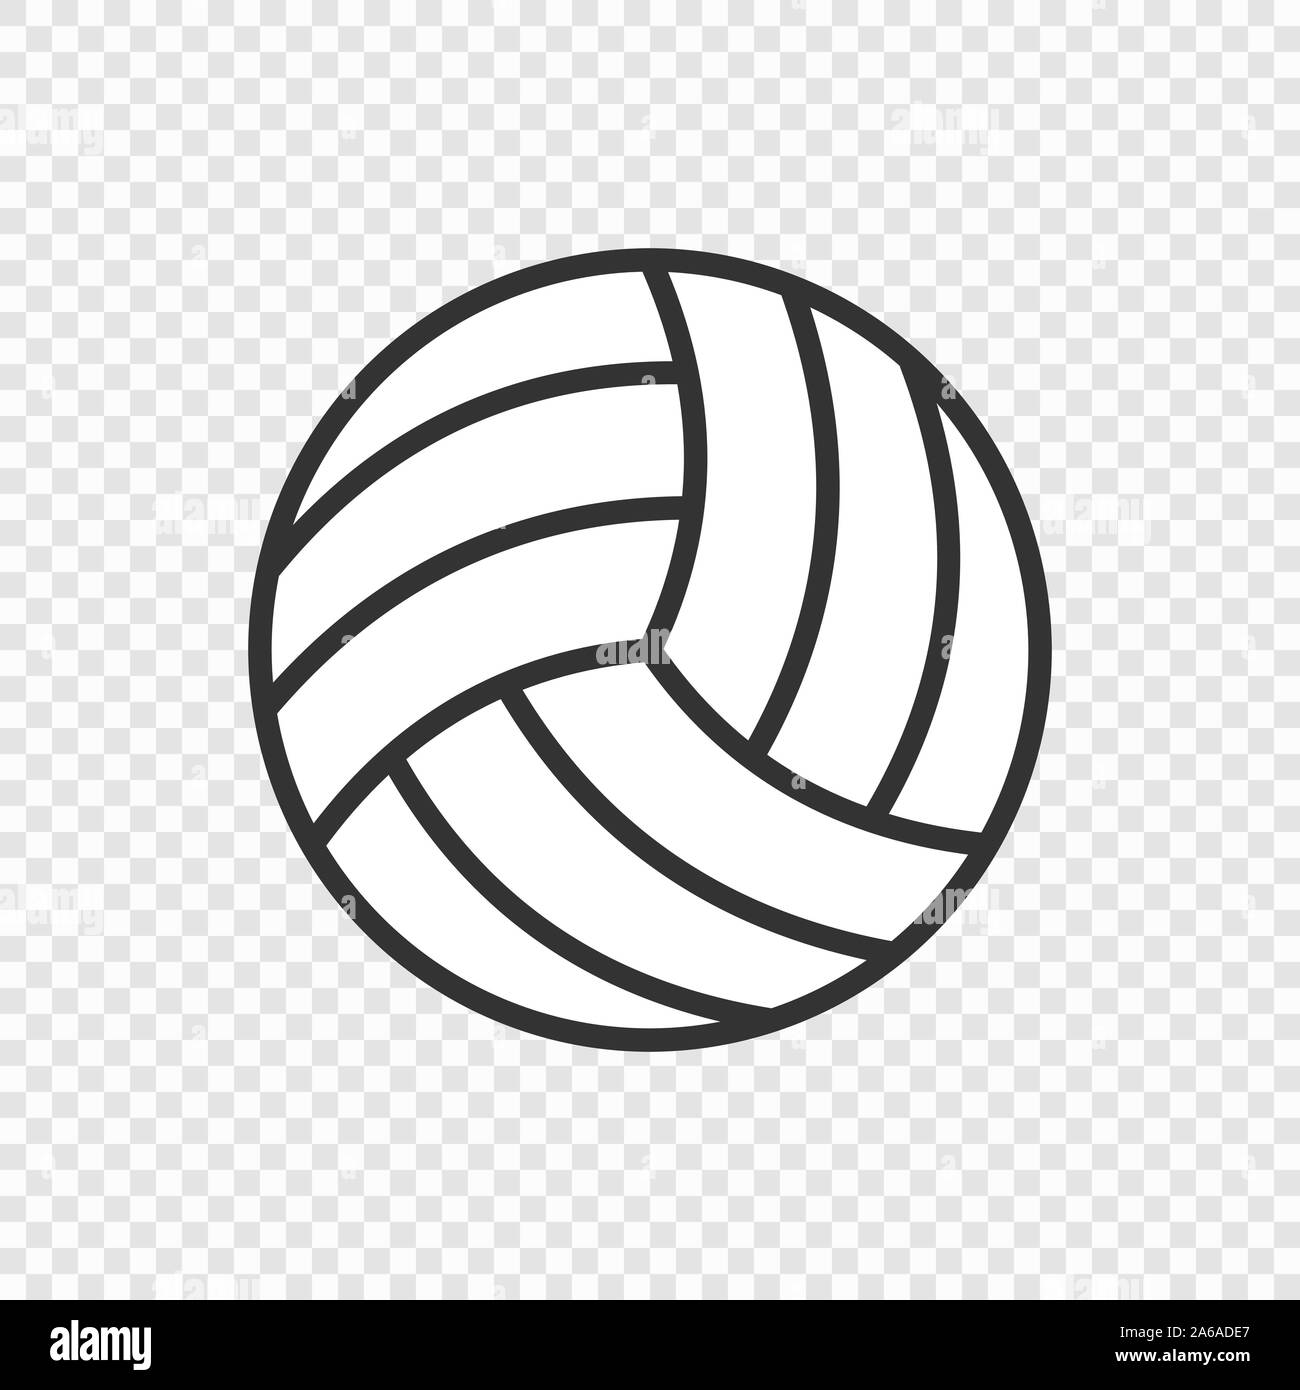 Descargar vóleibol. pelota para jugar voleibol. ilustración vectorial  aislado sobre fondo blanco. gr…